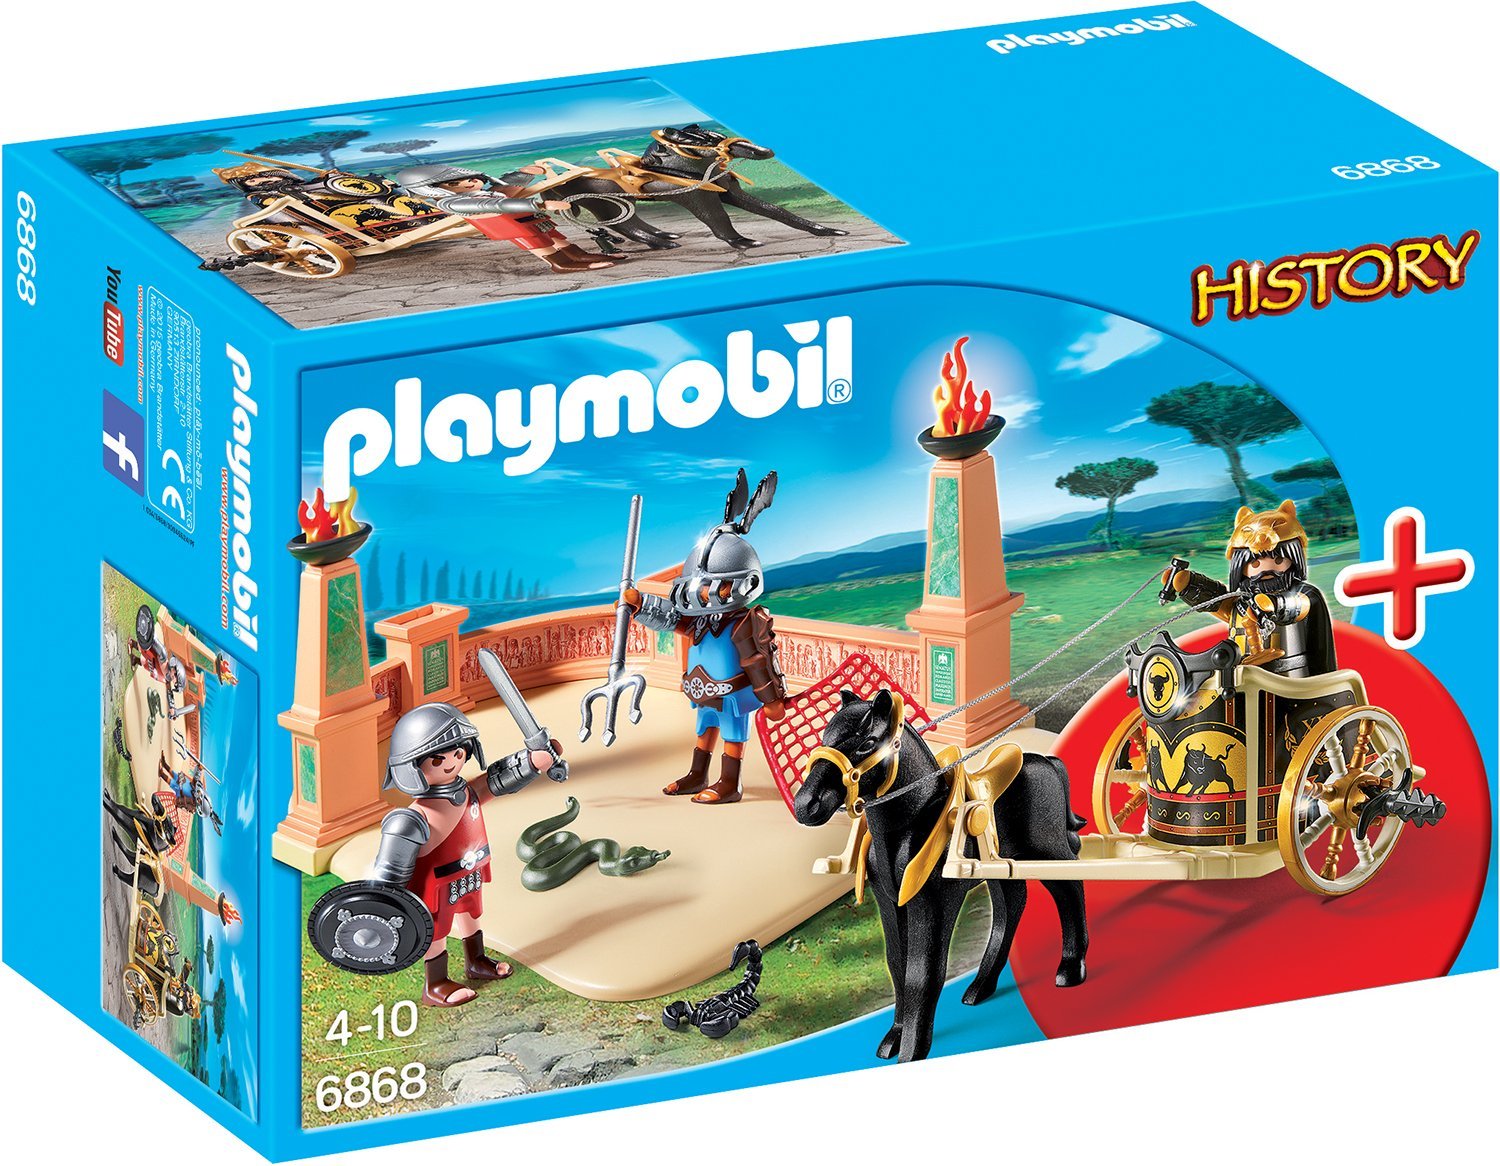 Bild zu [Prime] Playmobil History Gladiatorenkampf (6868) für 11,40€